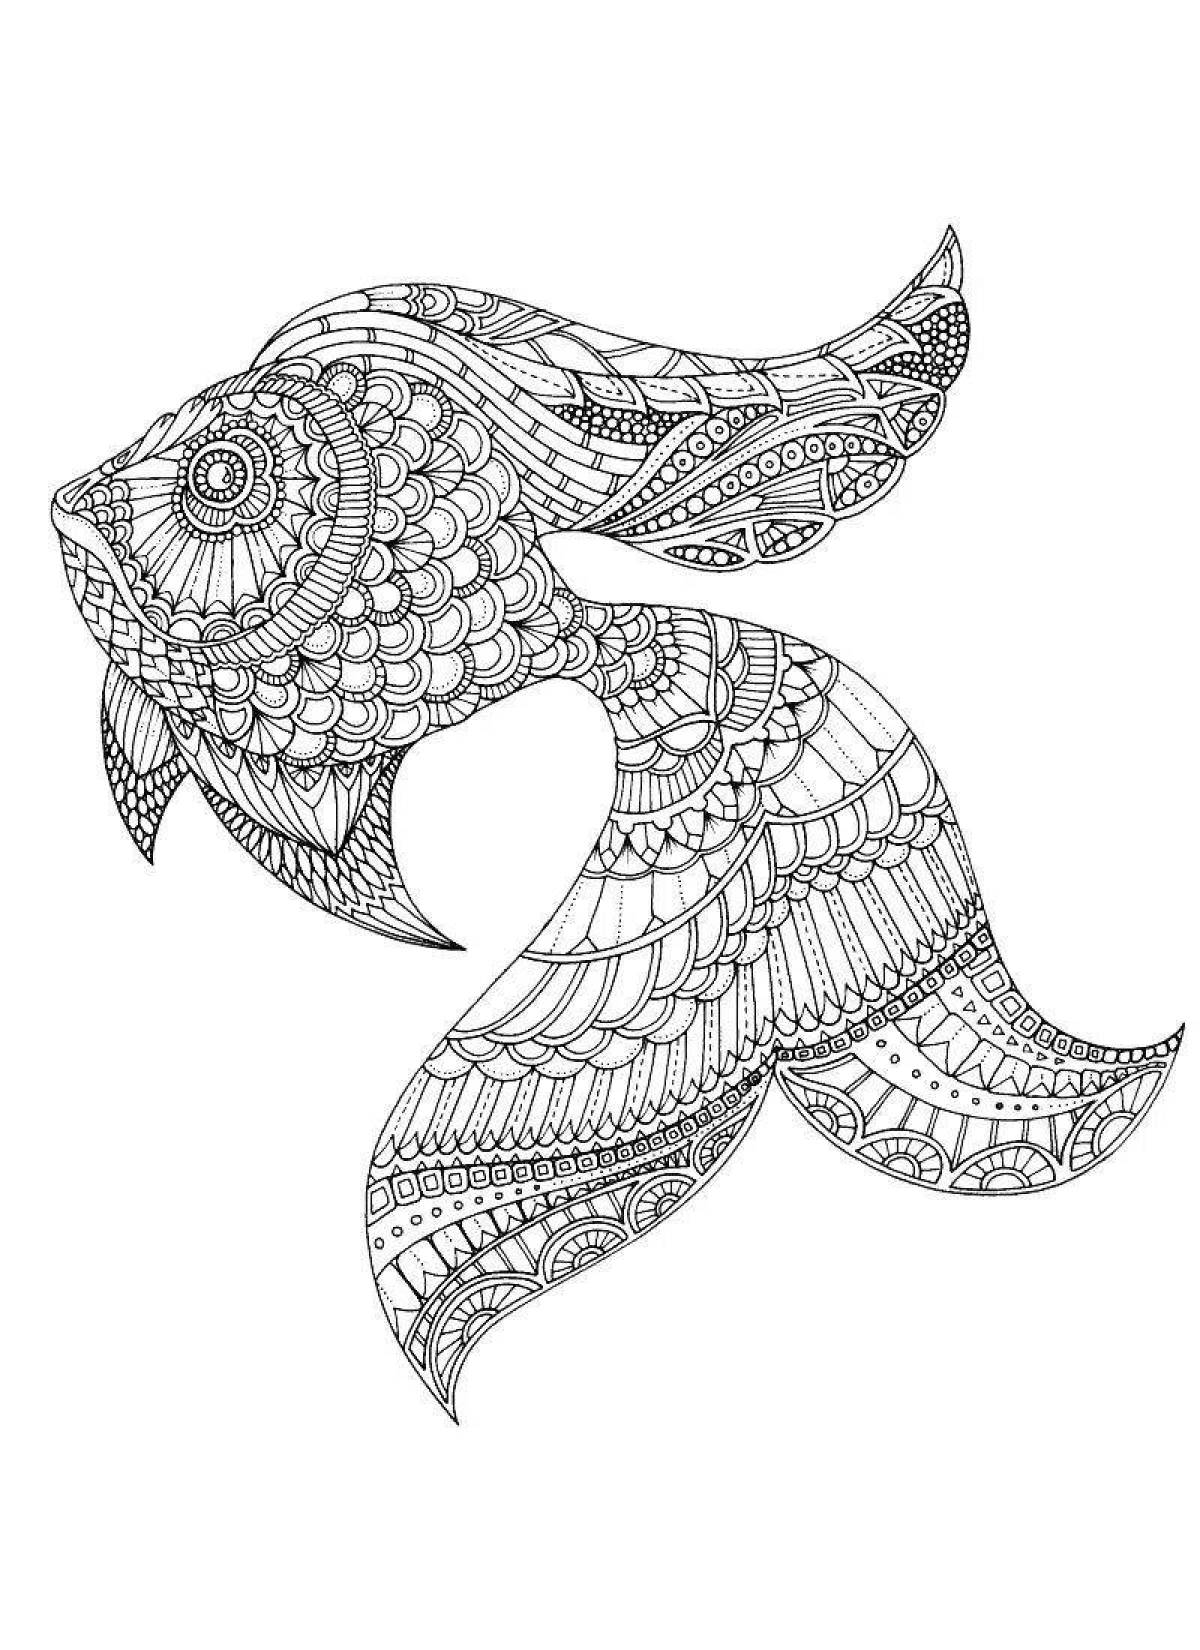 Coloring book magical anti-stress fish